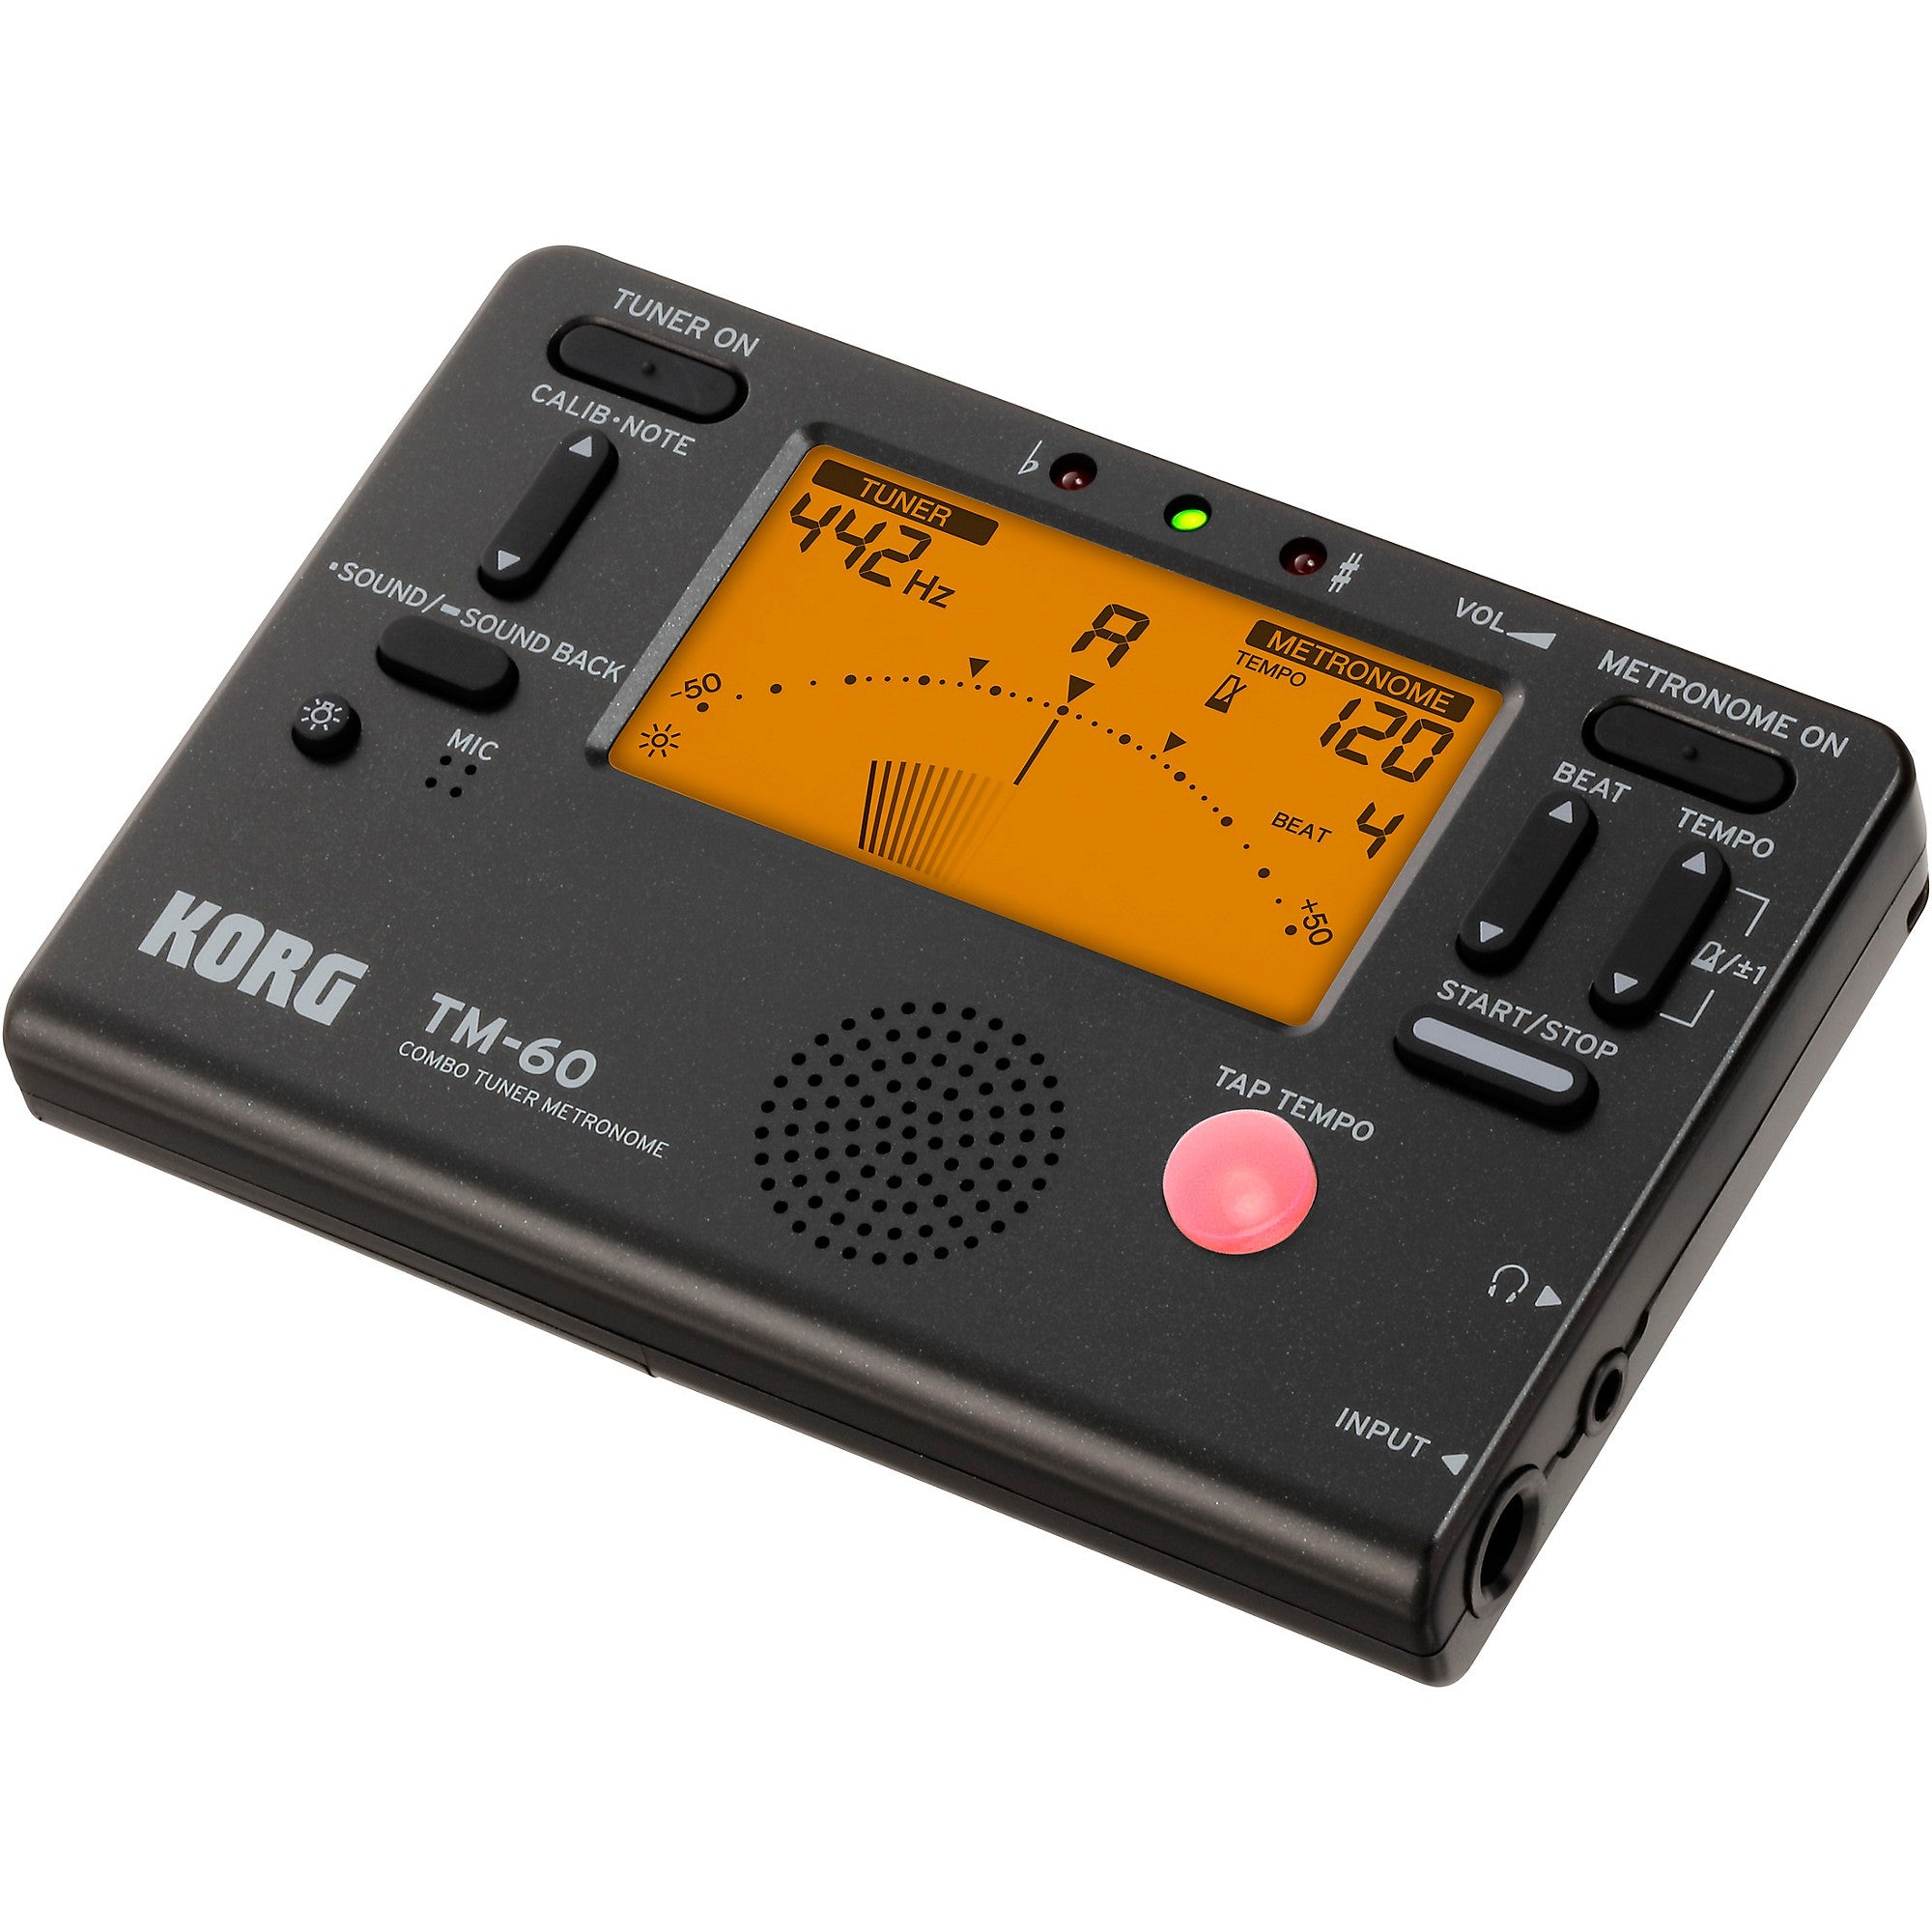 Korg TM-60 Tuner Metronome Black